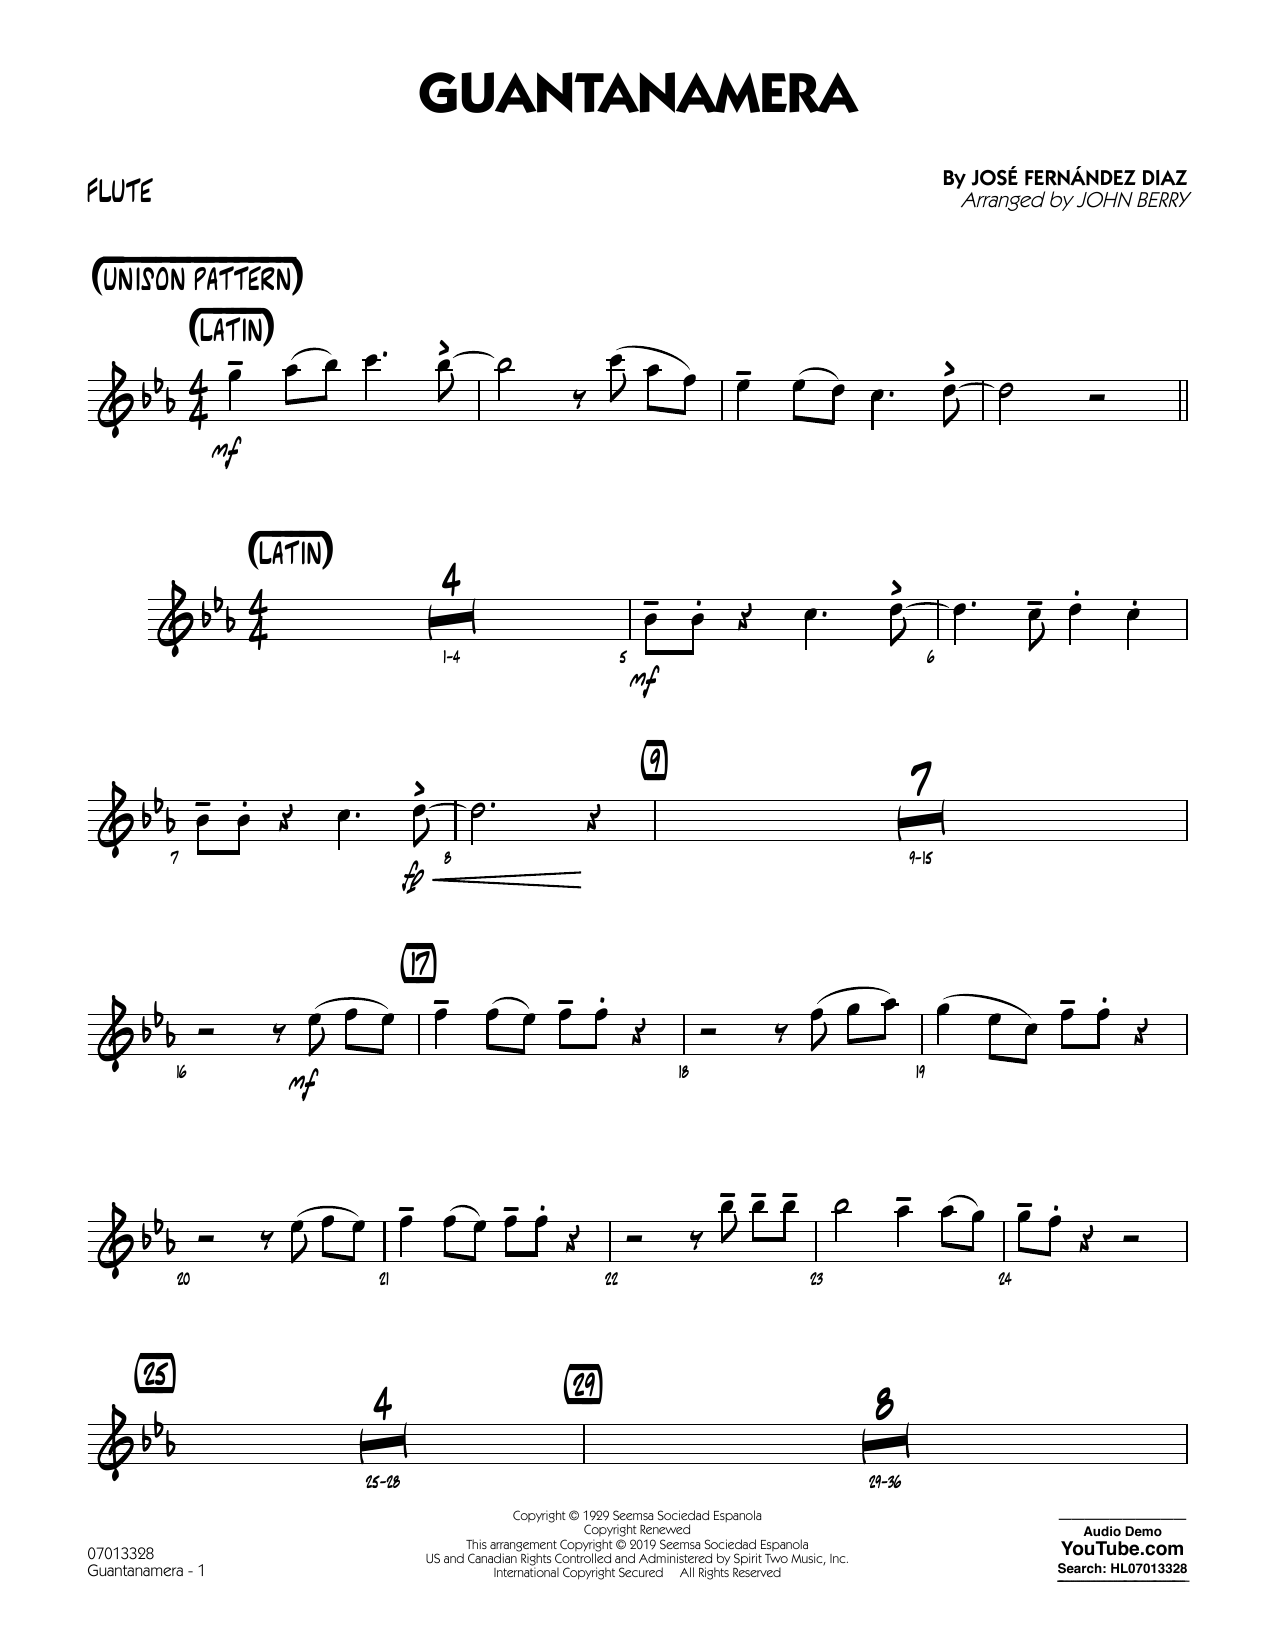 José Fernández Diaz Guantanamera (arr. John Berry) - Flute Sheet Music Notes & Chords for Jazz Ensemble - Download or Print PDF